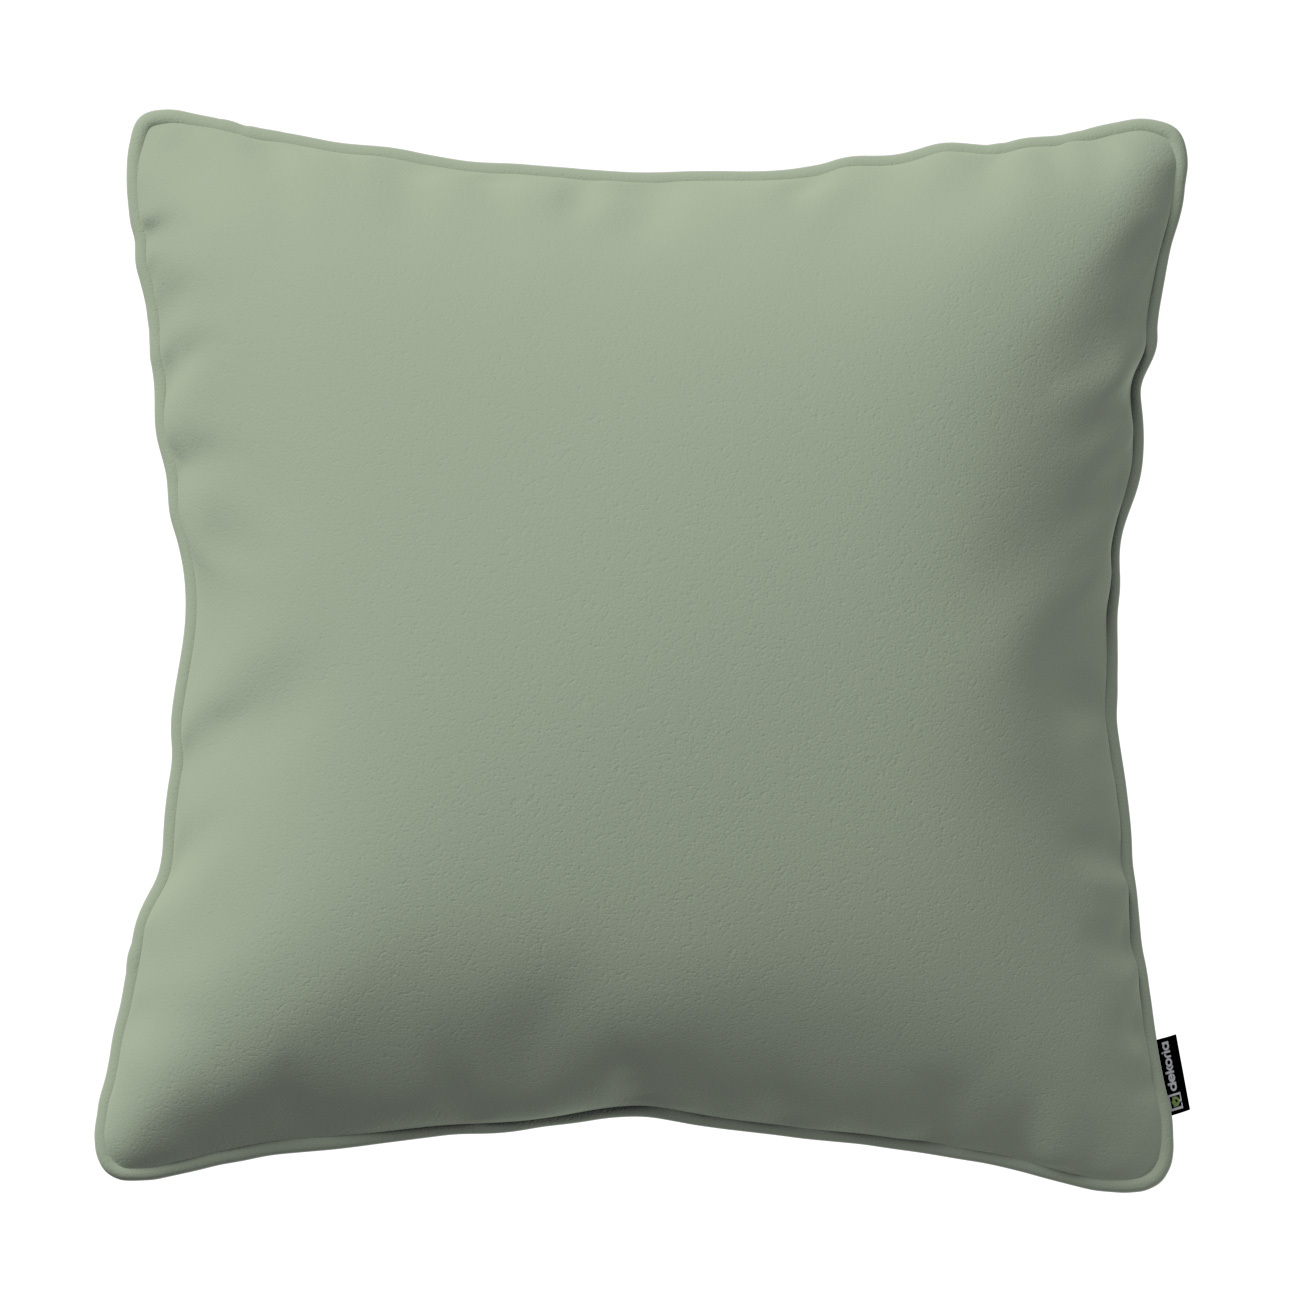 Kissenhülle Gabi mit Paspel, hellgrün, 60 x 60 cm, Crema (144-68) günstig online kaufen